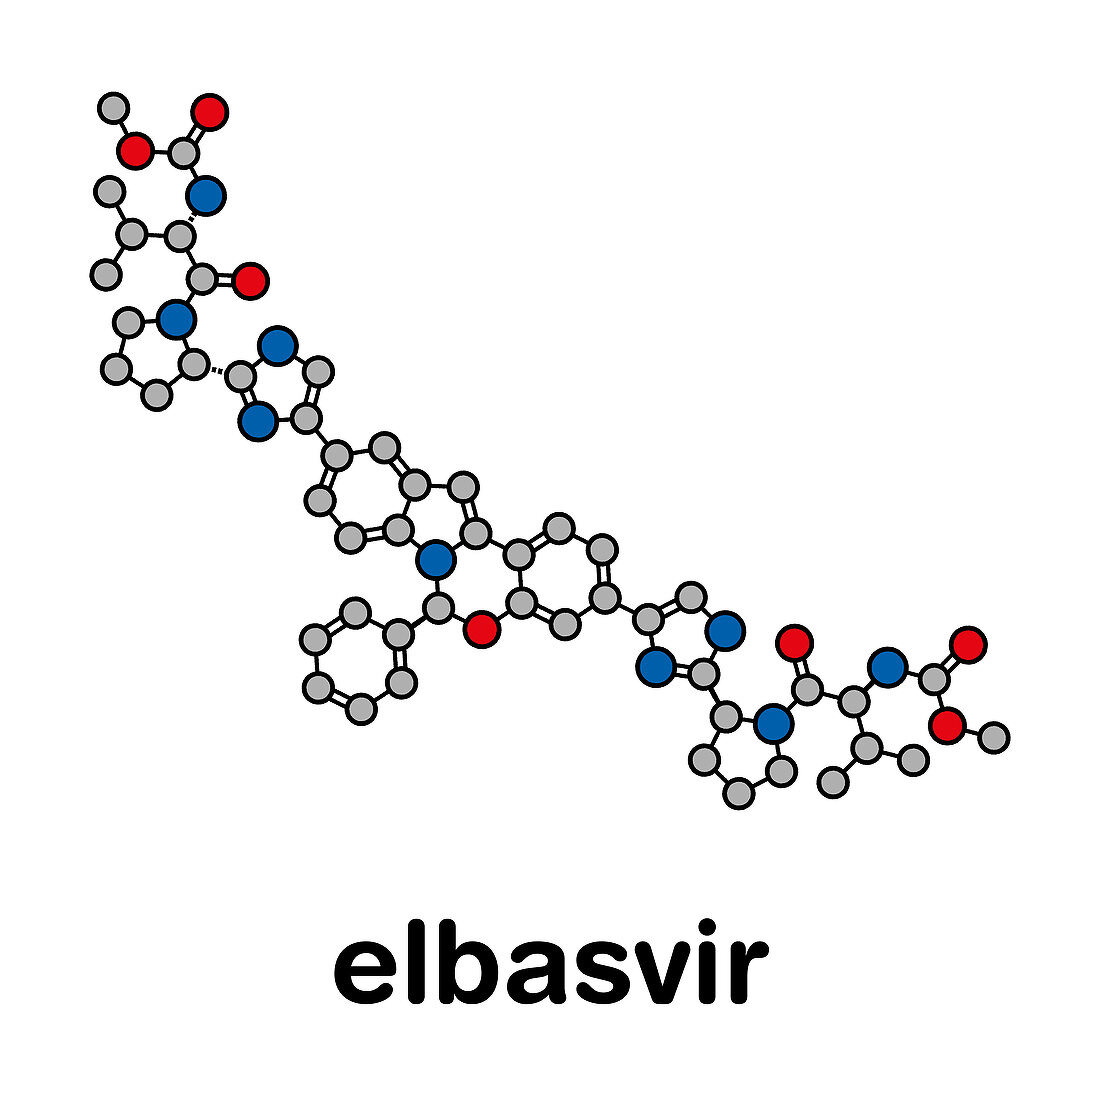 Elbasvir hepatitis C virus drug molecule, illustration